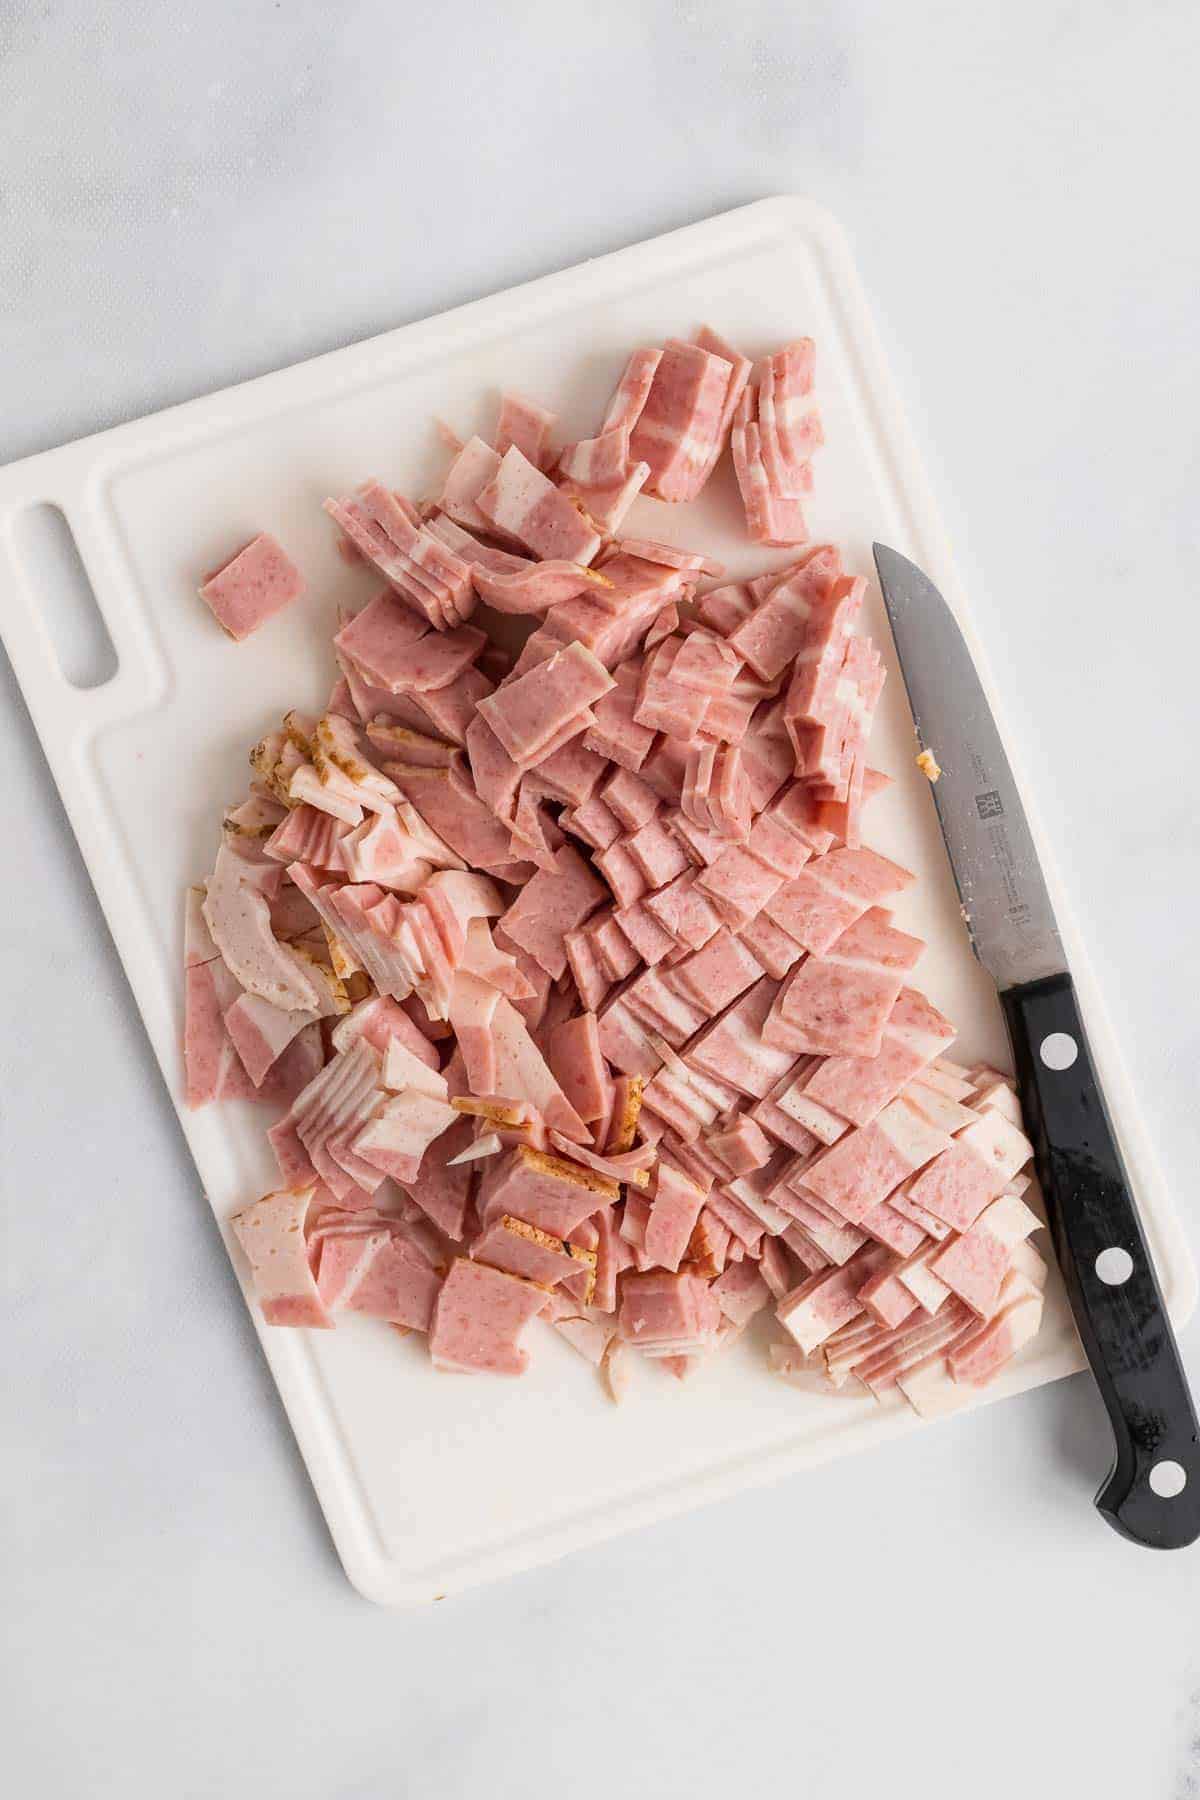 Bacon strips on a cutting board